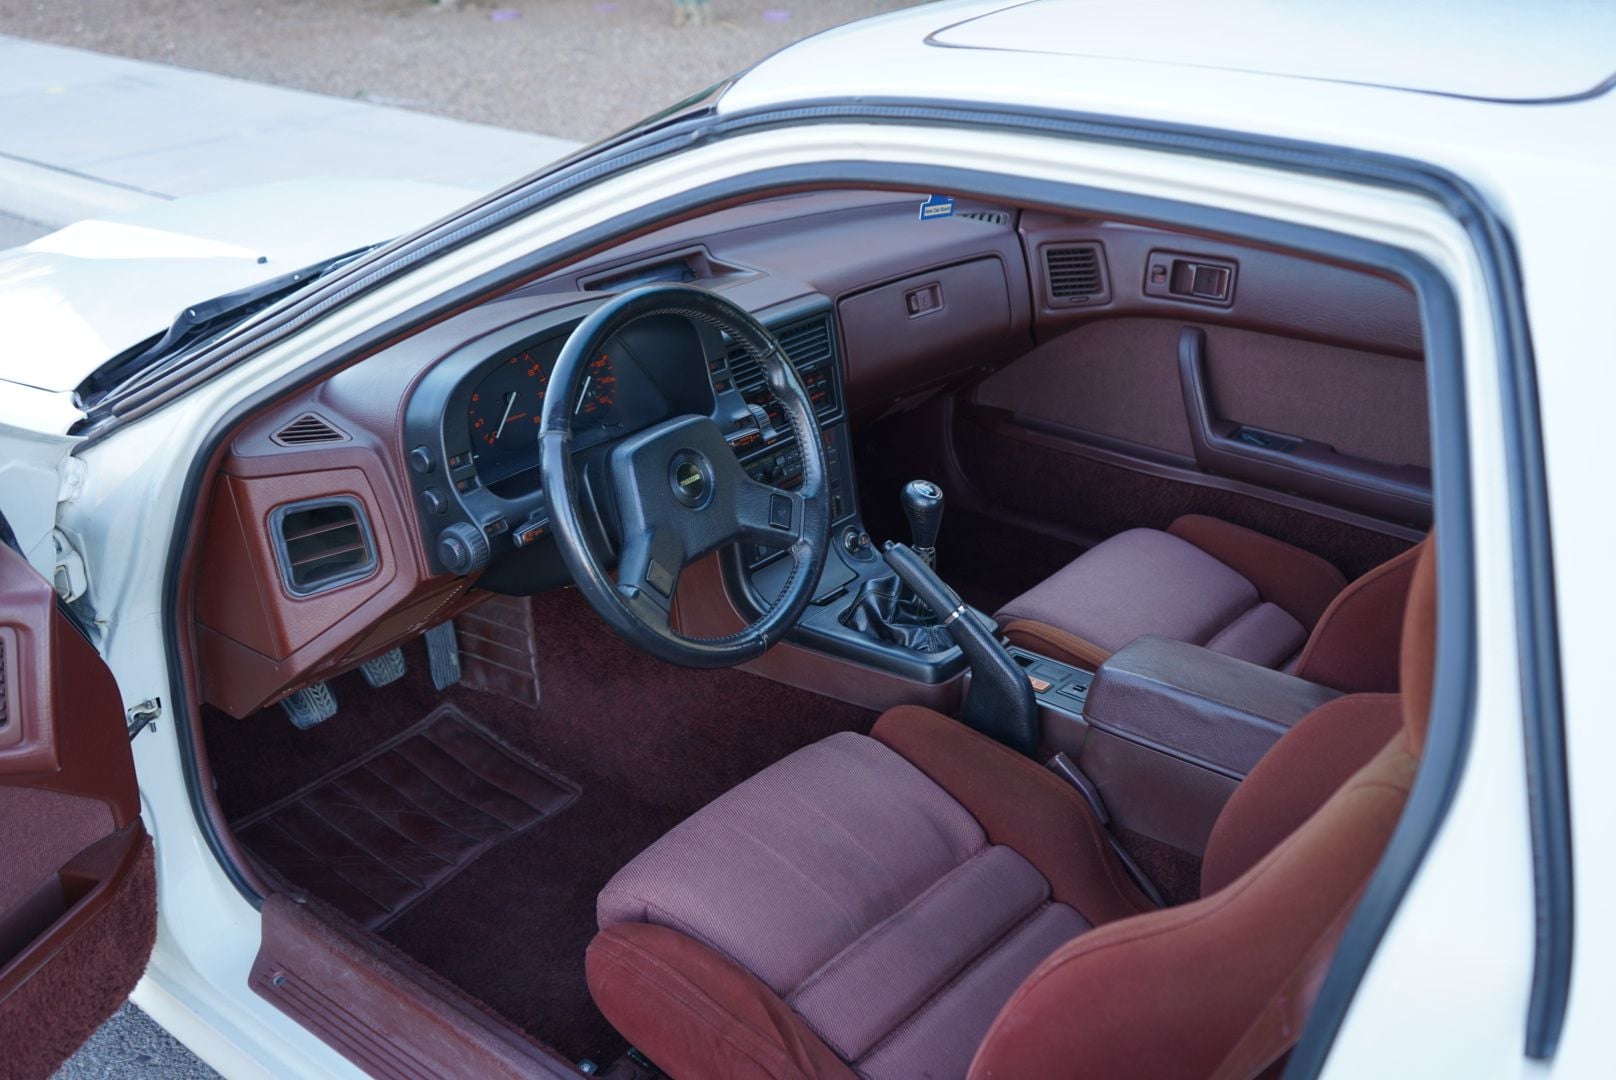 1987 Mazda RX-7 - 1987 Turbo II FOR SALE - Used - VIN JM1FC3329H0157165 - 149,135 Miles - Manual - White - Tucson, AZ 85747, United States